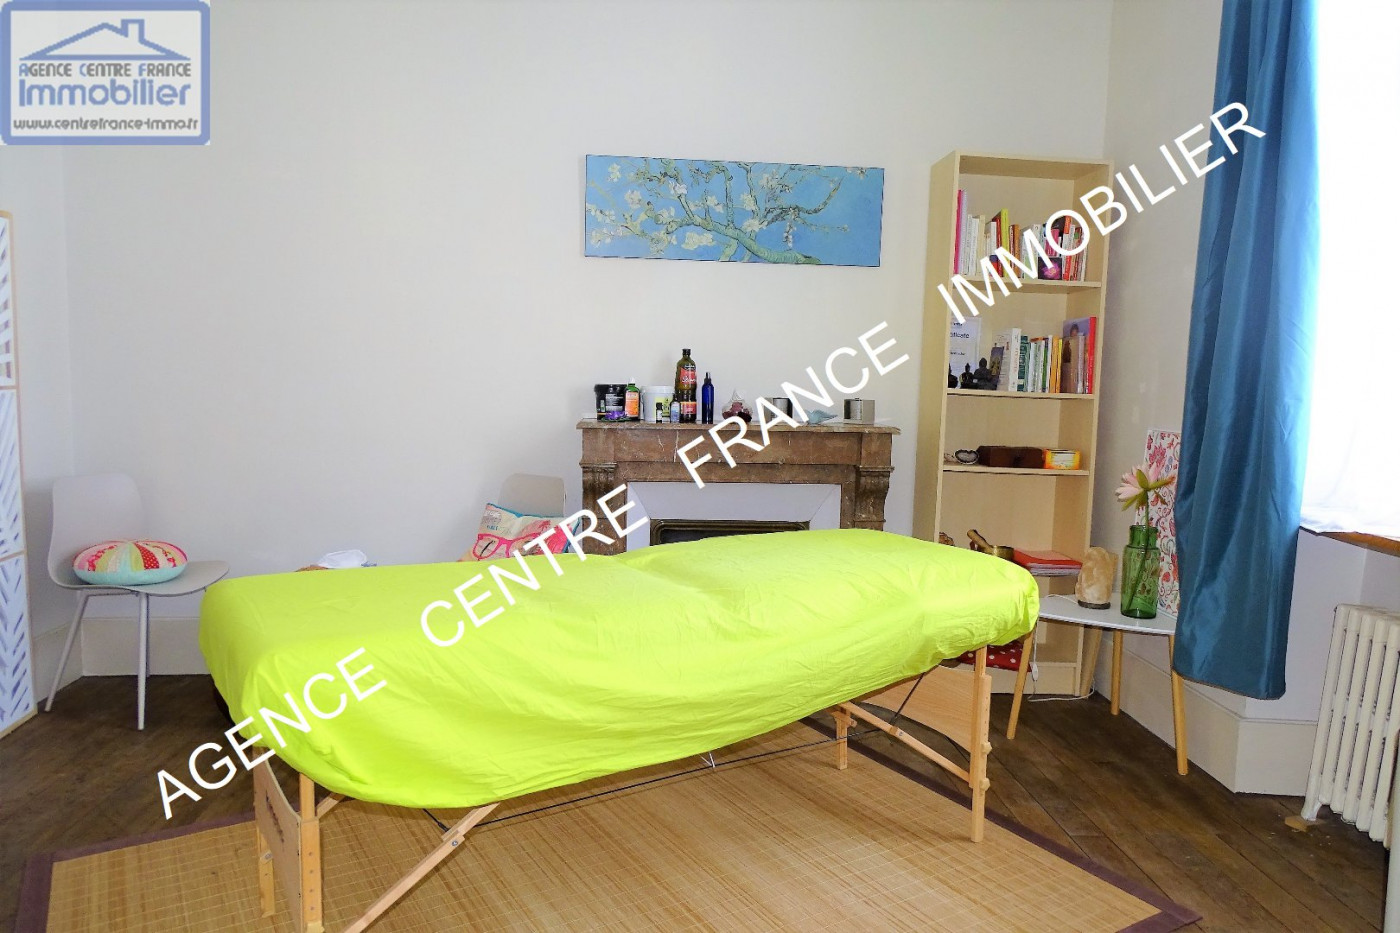 A vendre  Bourges | Réf 030011543 - Agence centre france immobilier